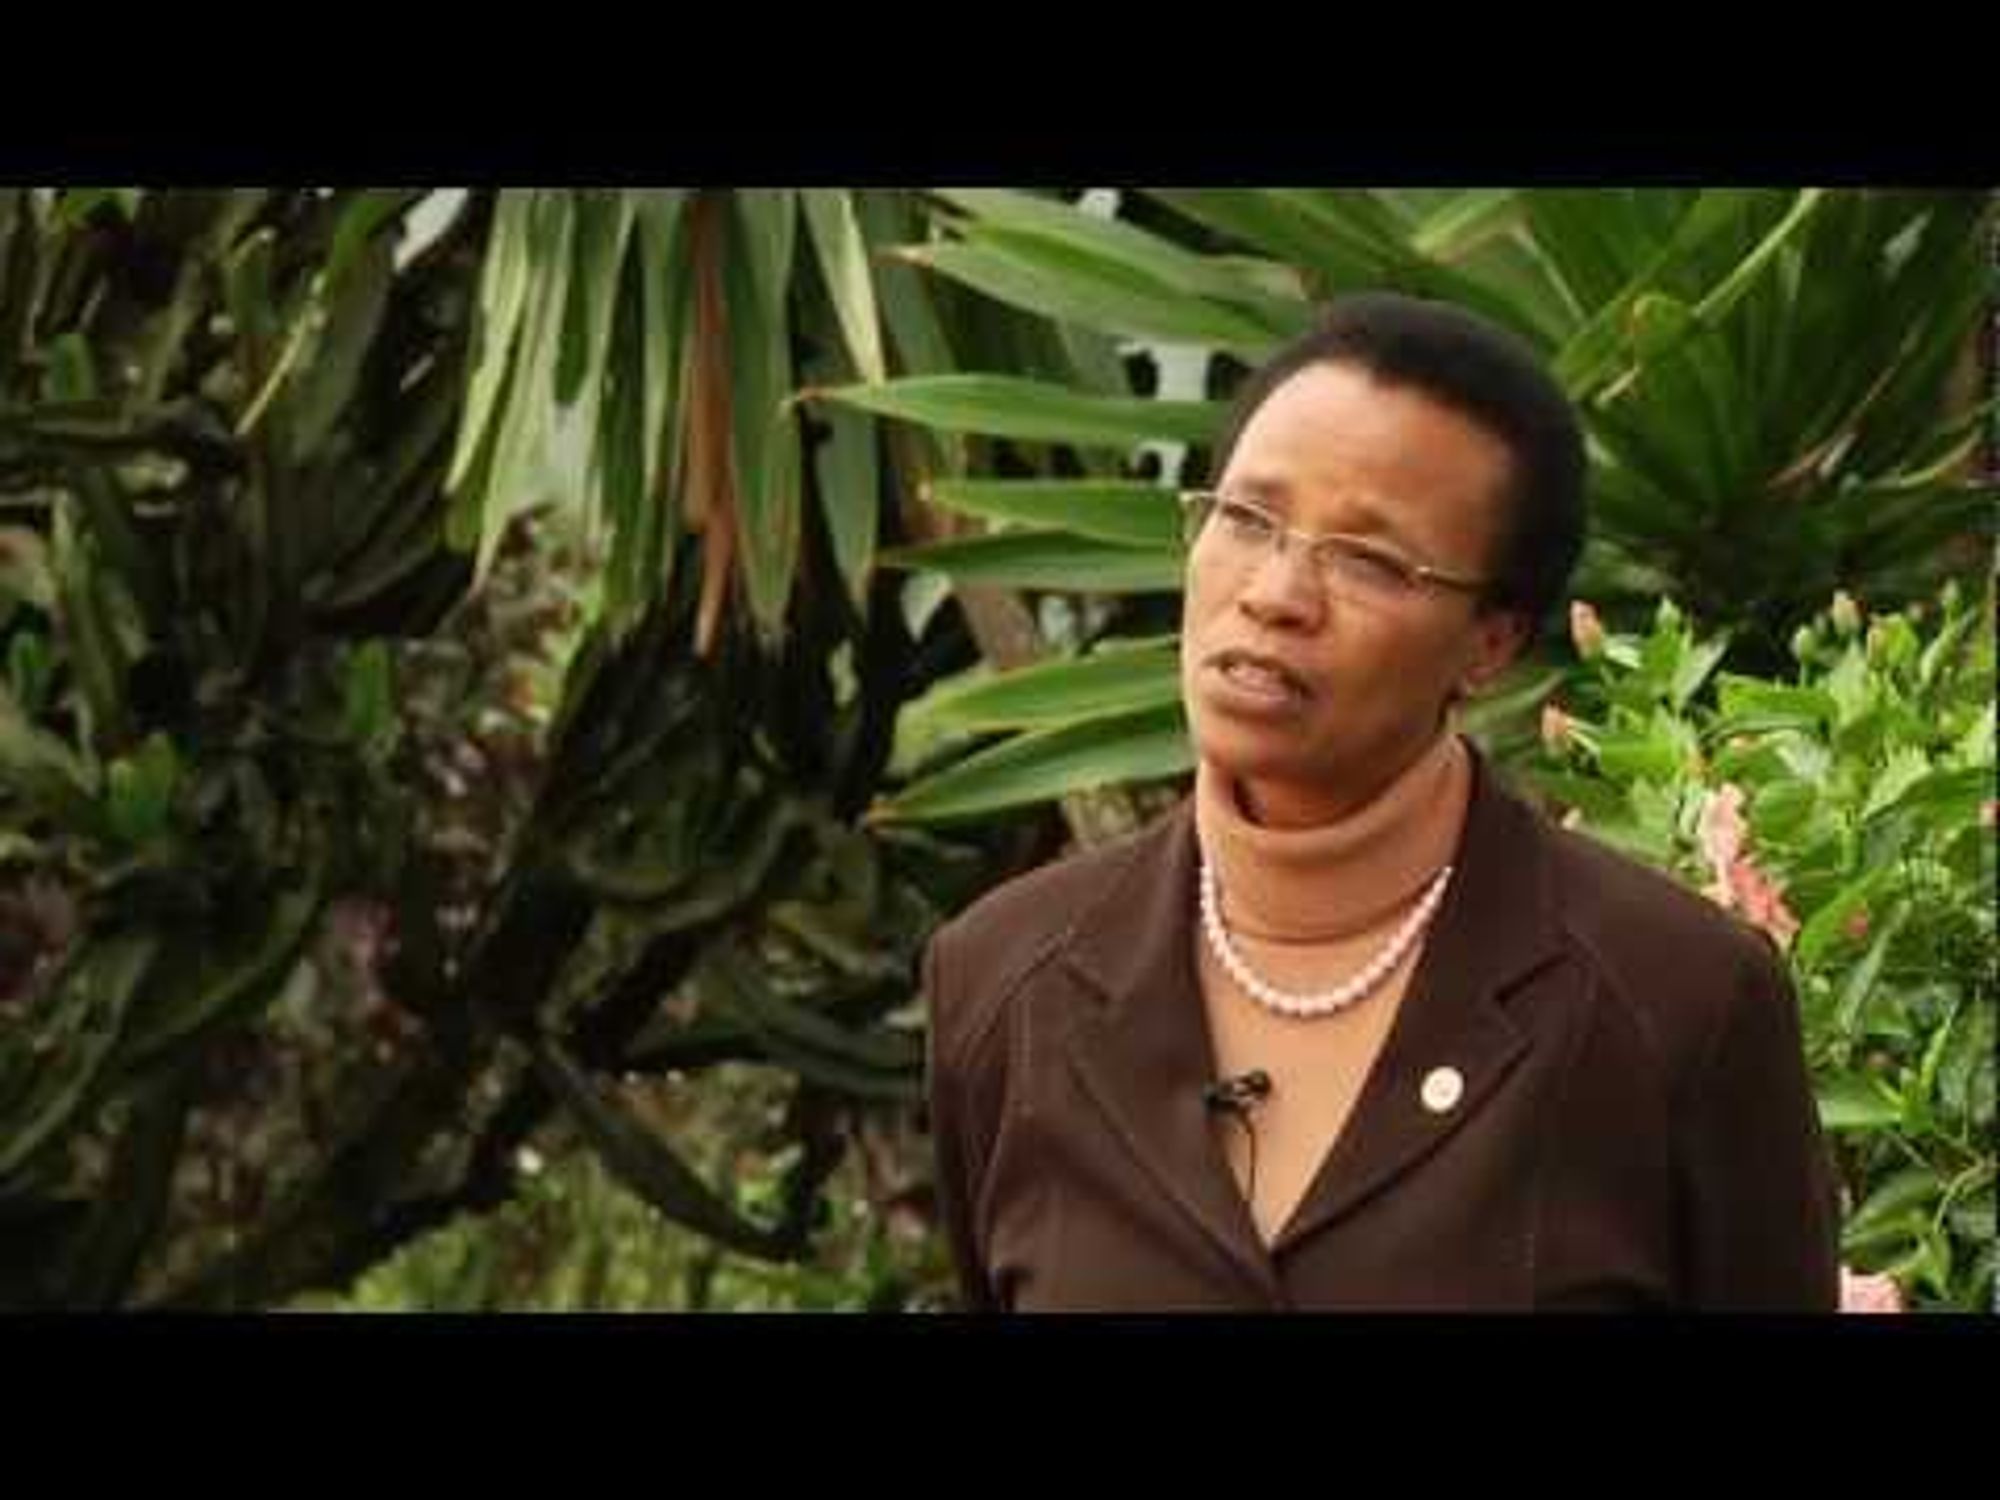 Rwanda: Choosing the Path To Sustainability - Short film by John D. Liu